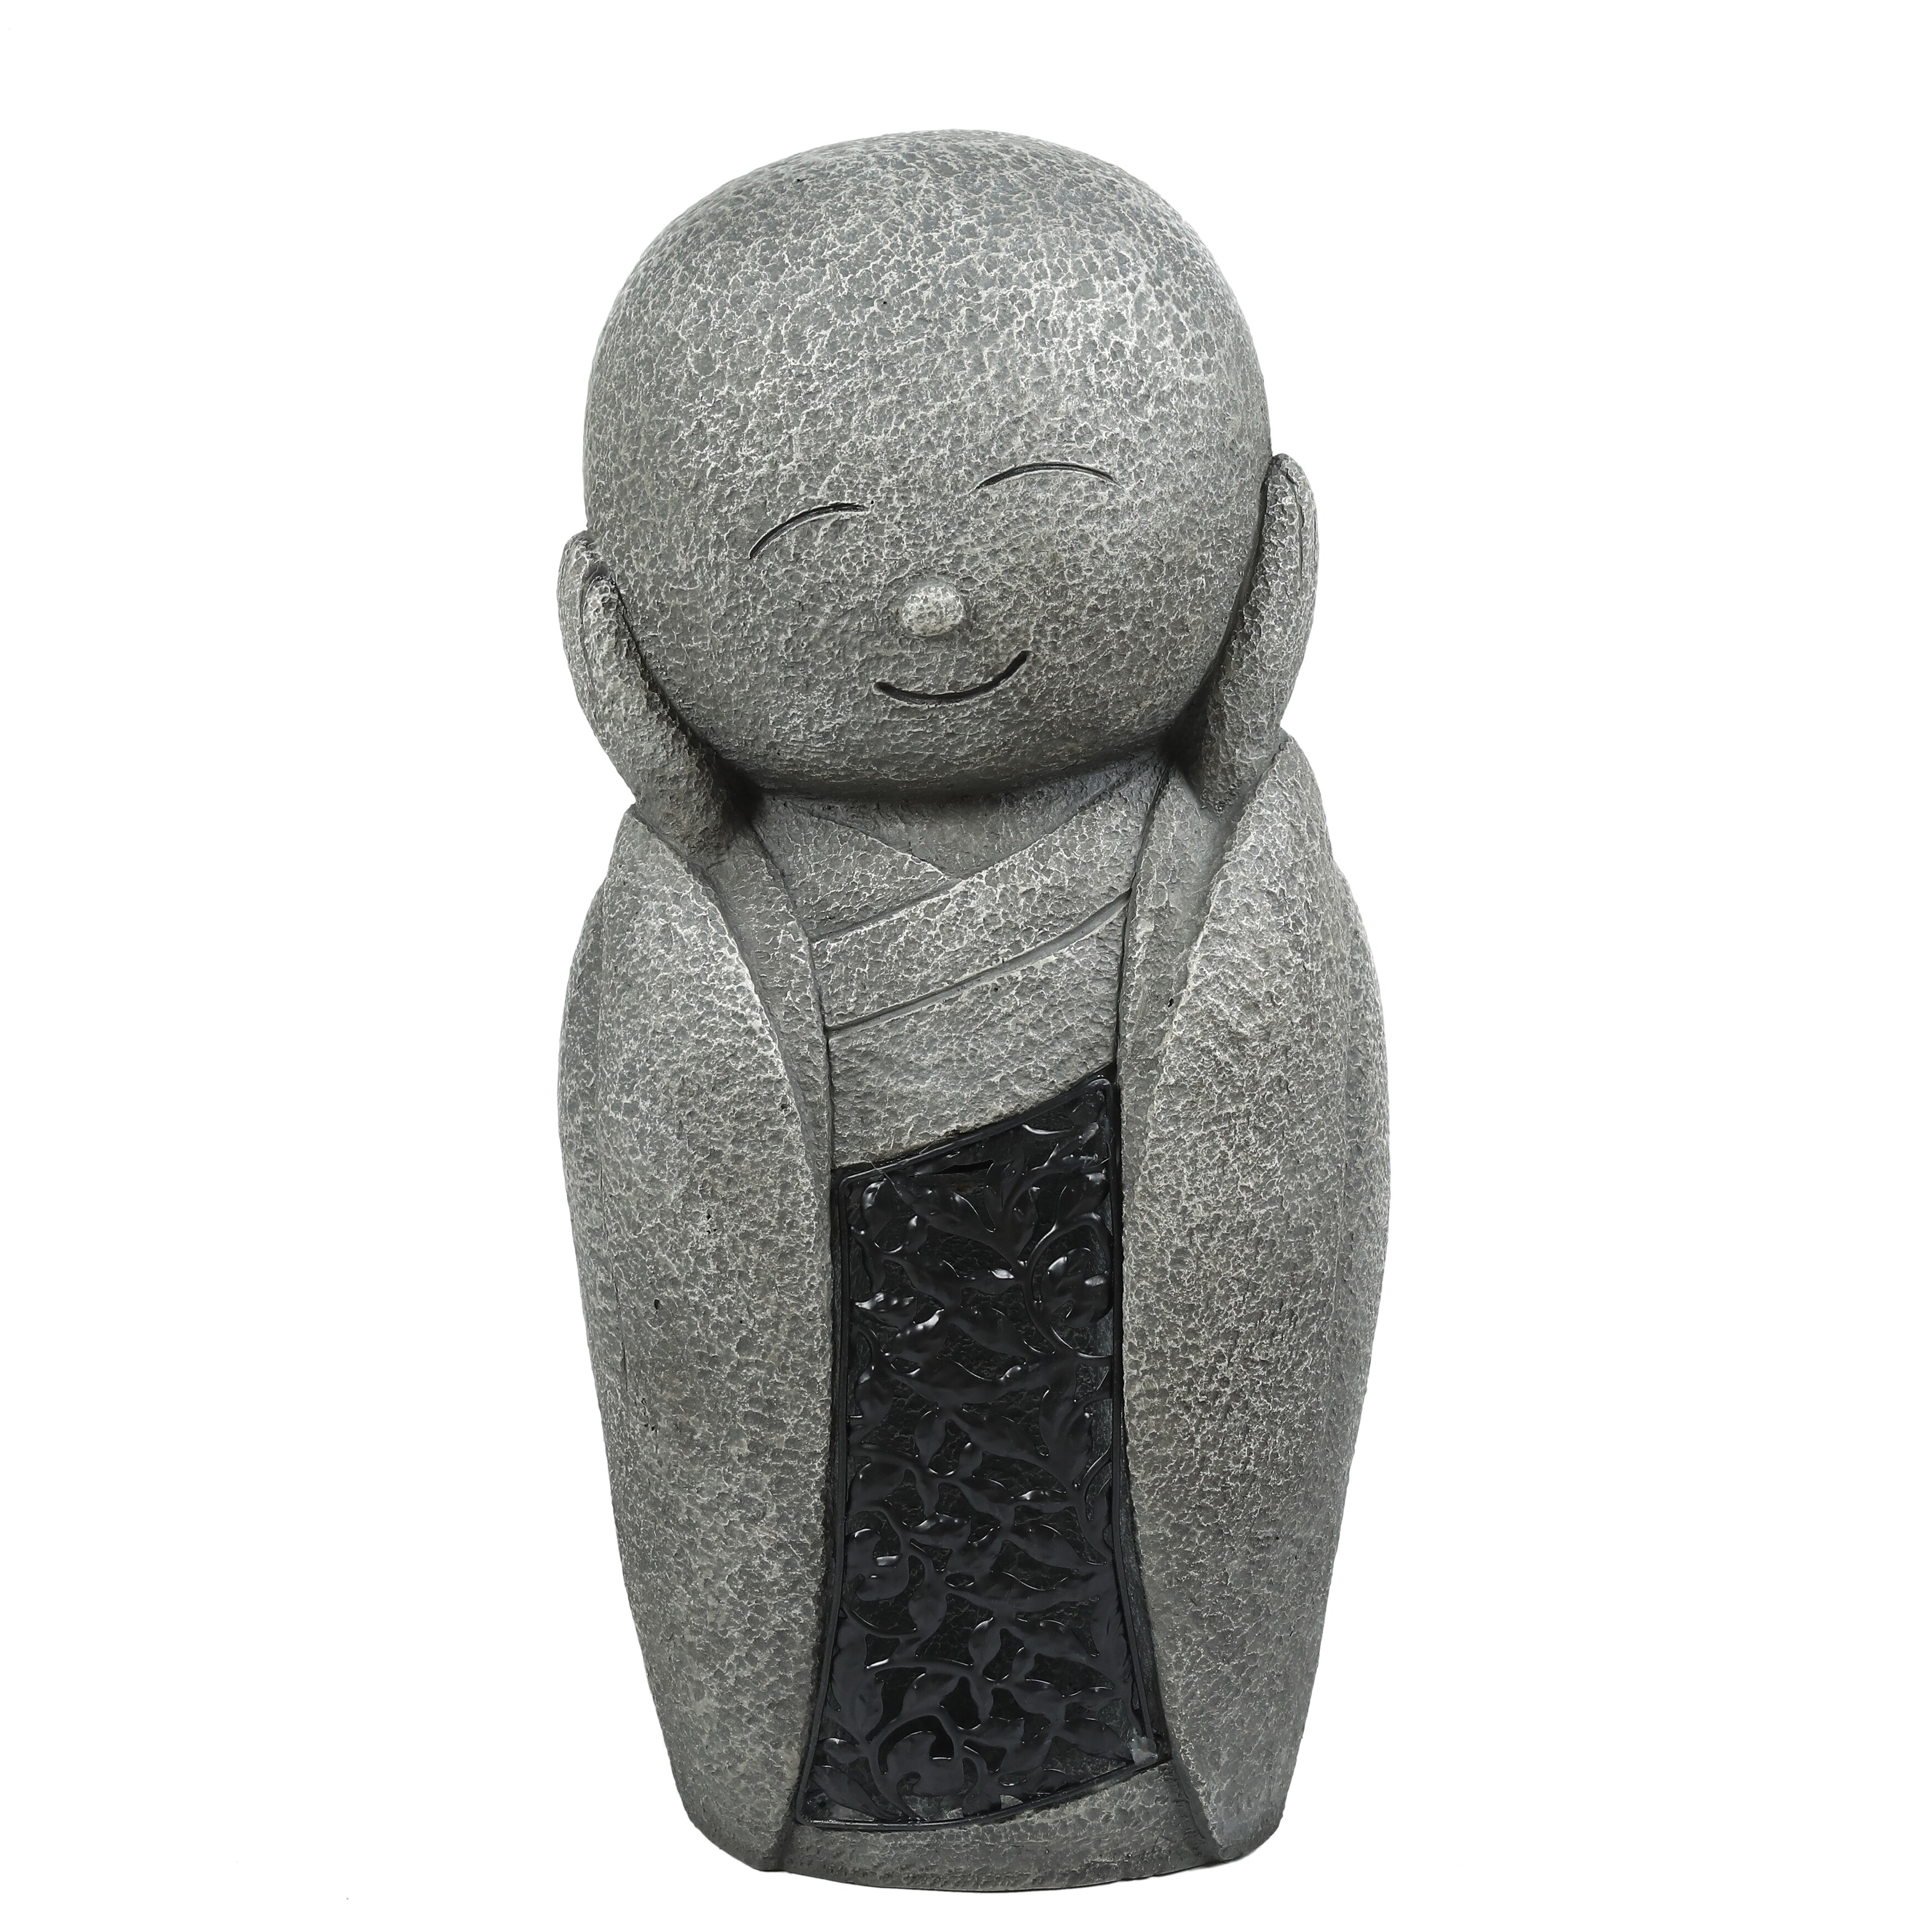 Darthome Ltd S/3 See Speak Hear No Evil Resin Buddha Monk Ornament Sculpture Figurine Statues